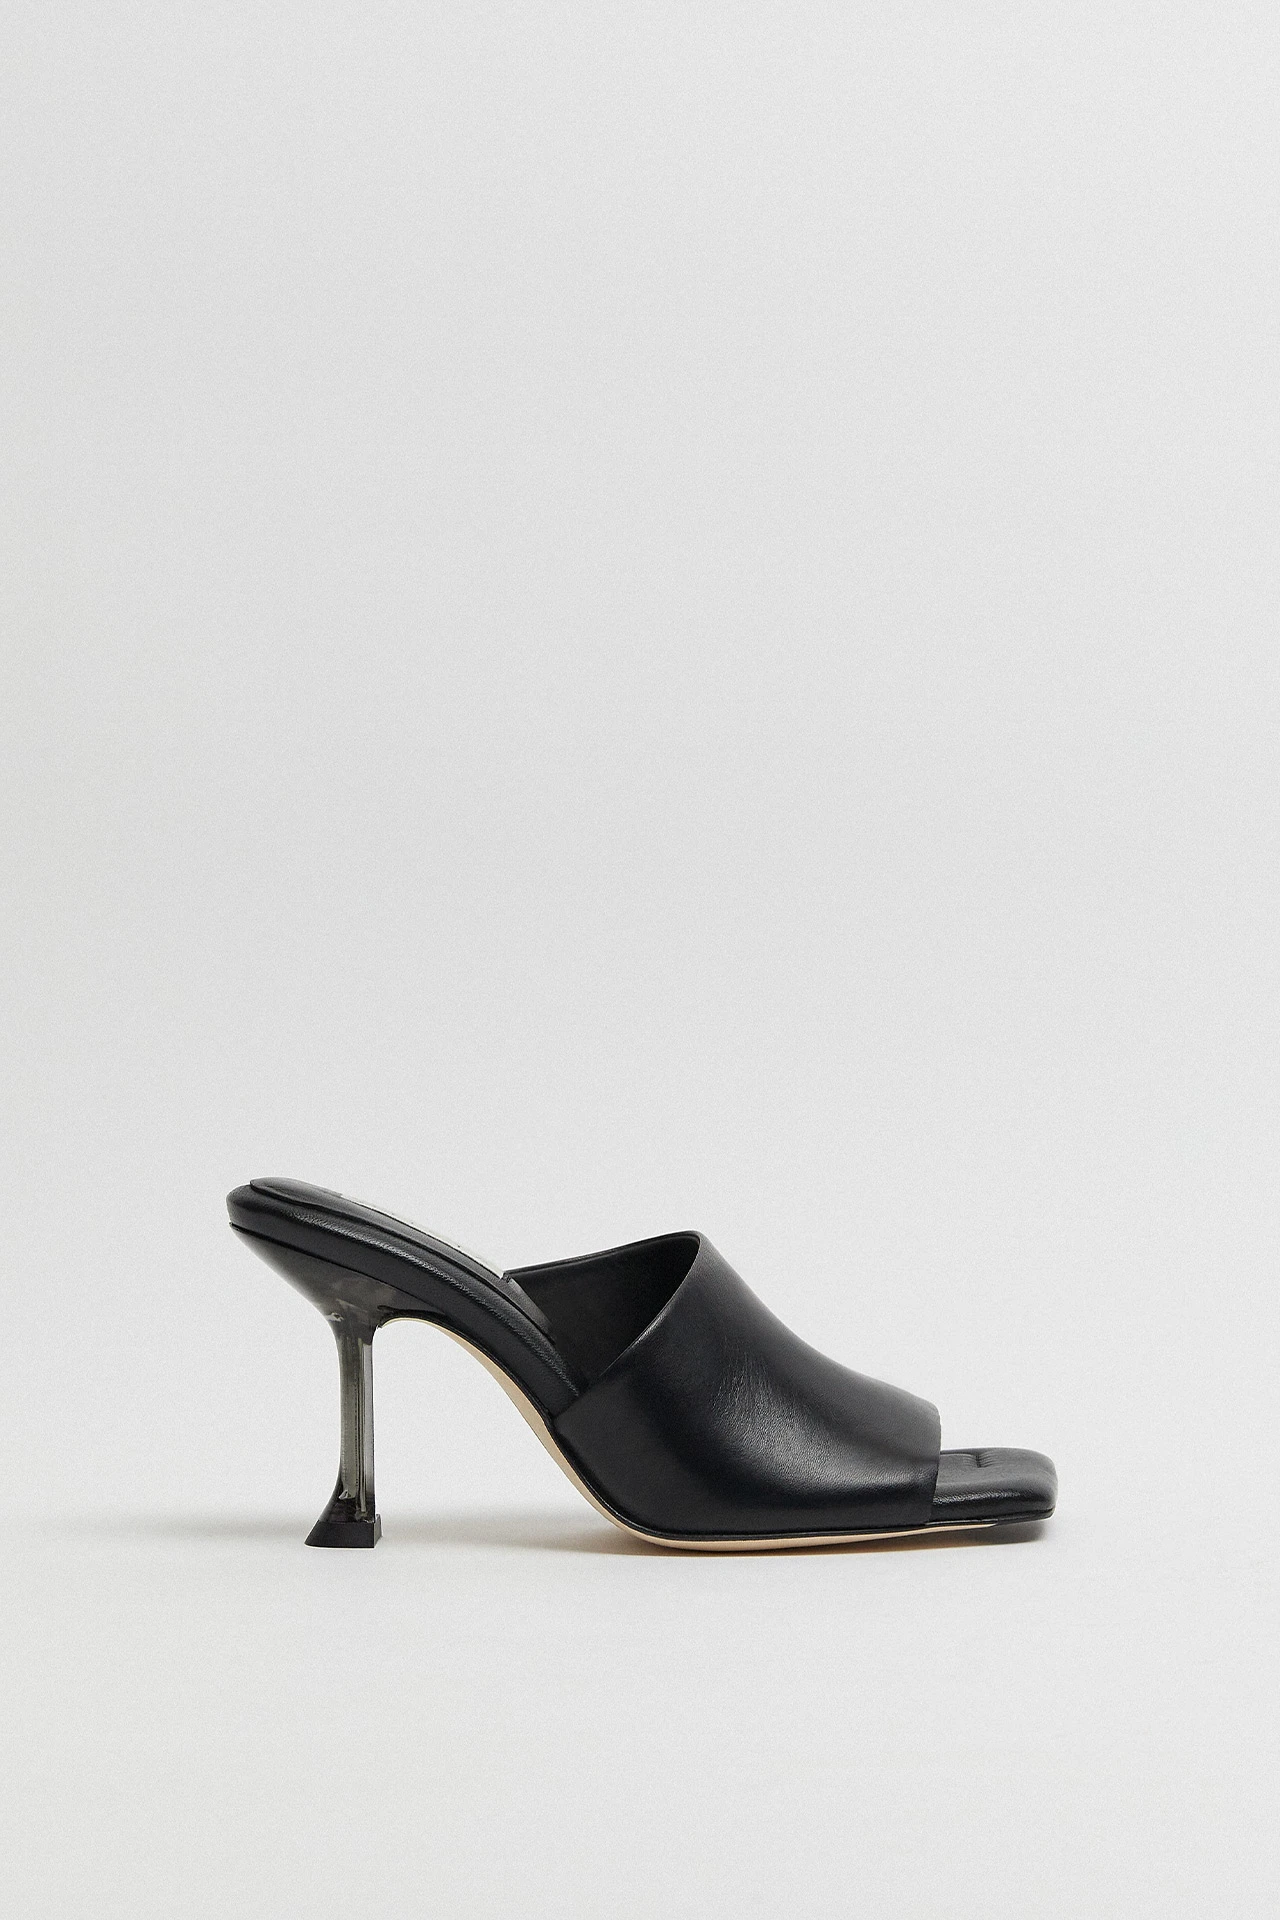 Miista-Miri-Black-Mules-Sandals-01